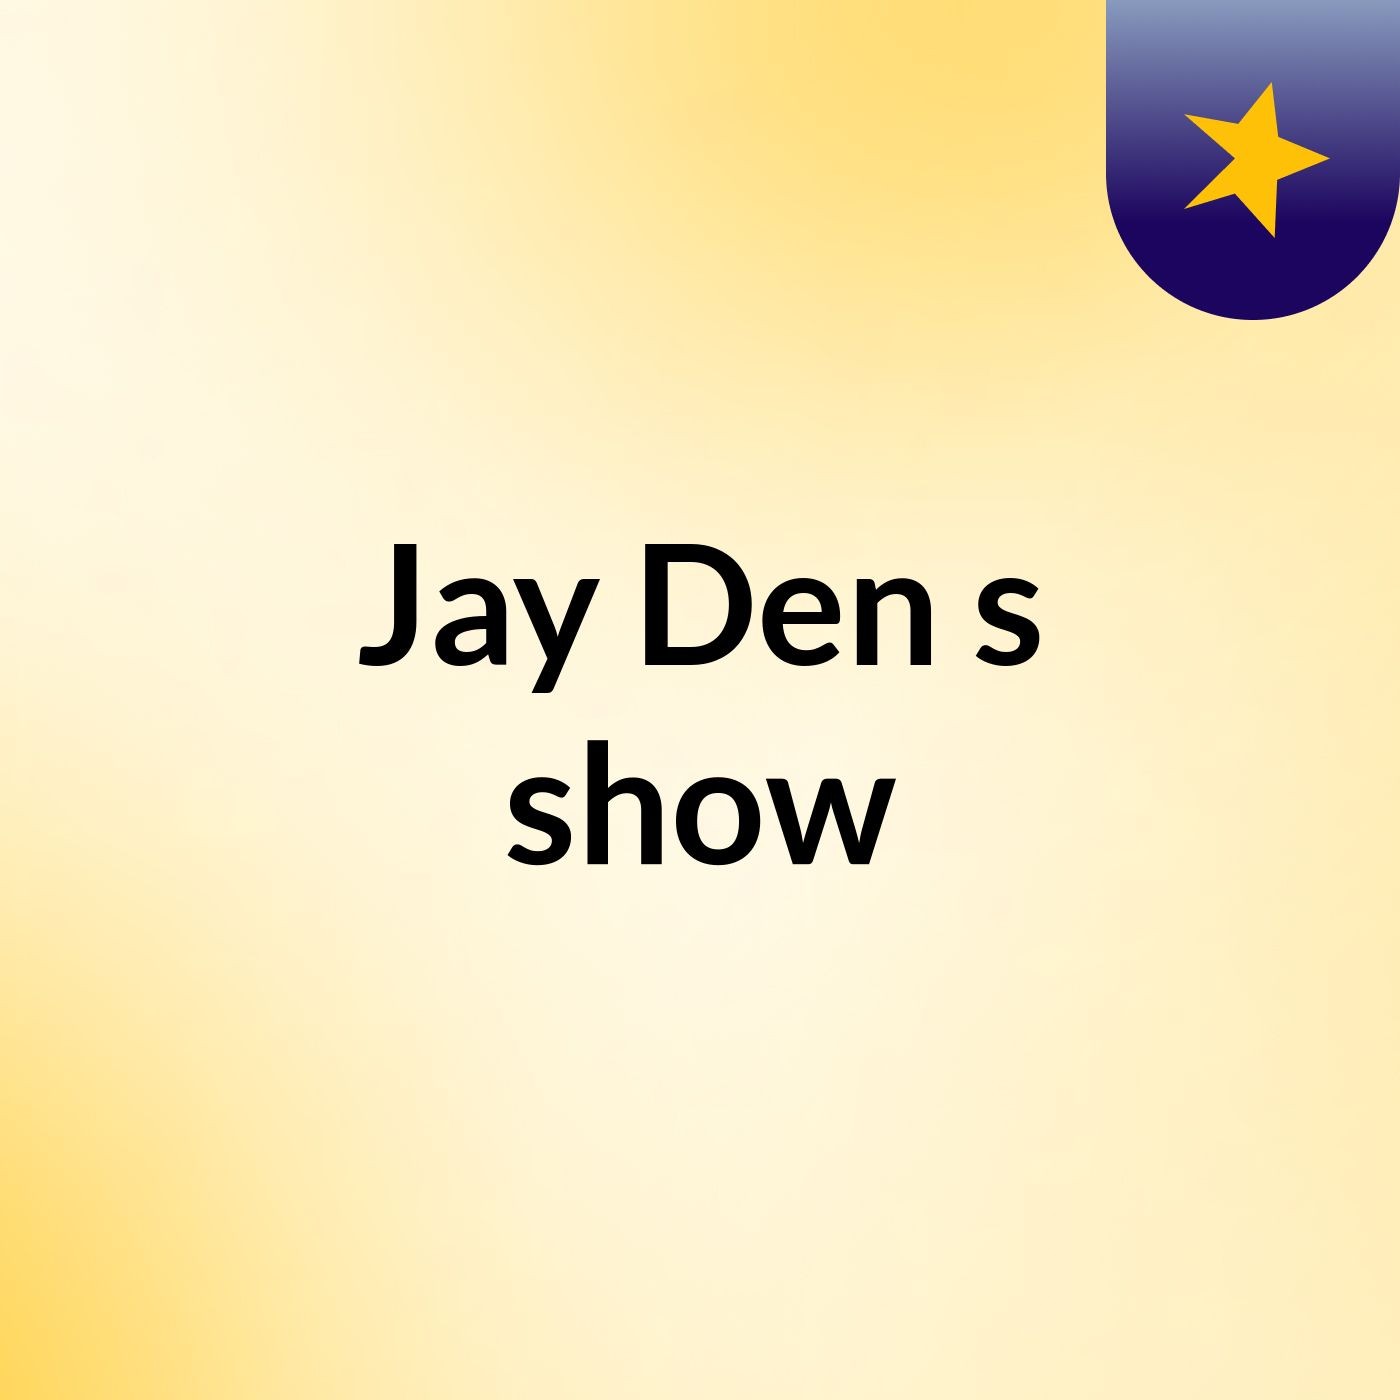 Jay Den's show